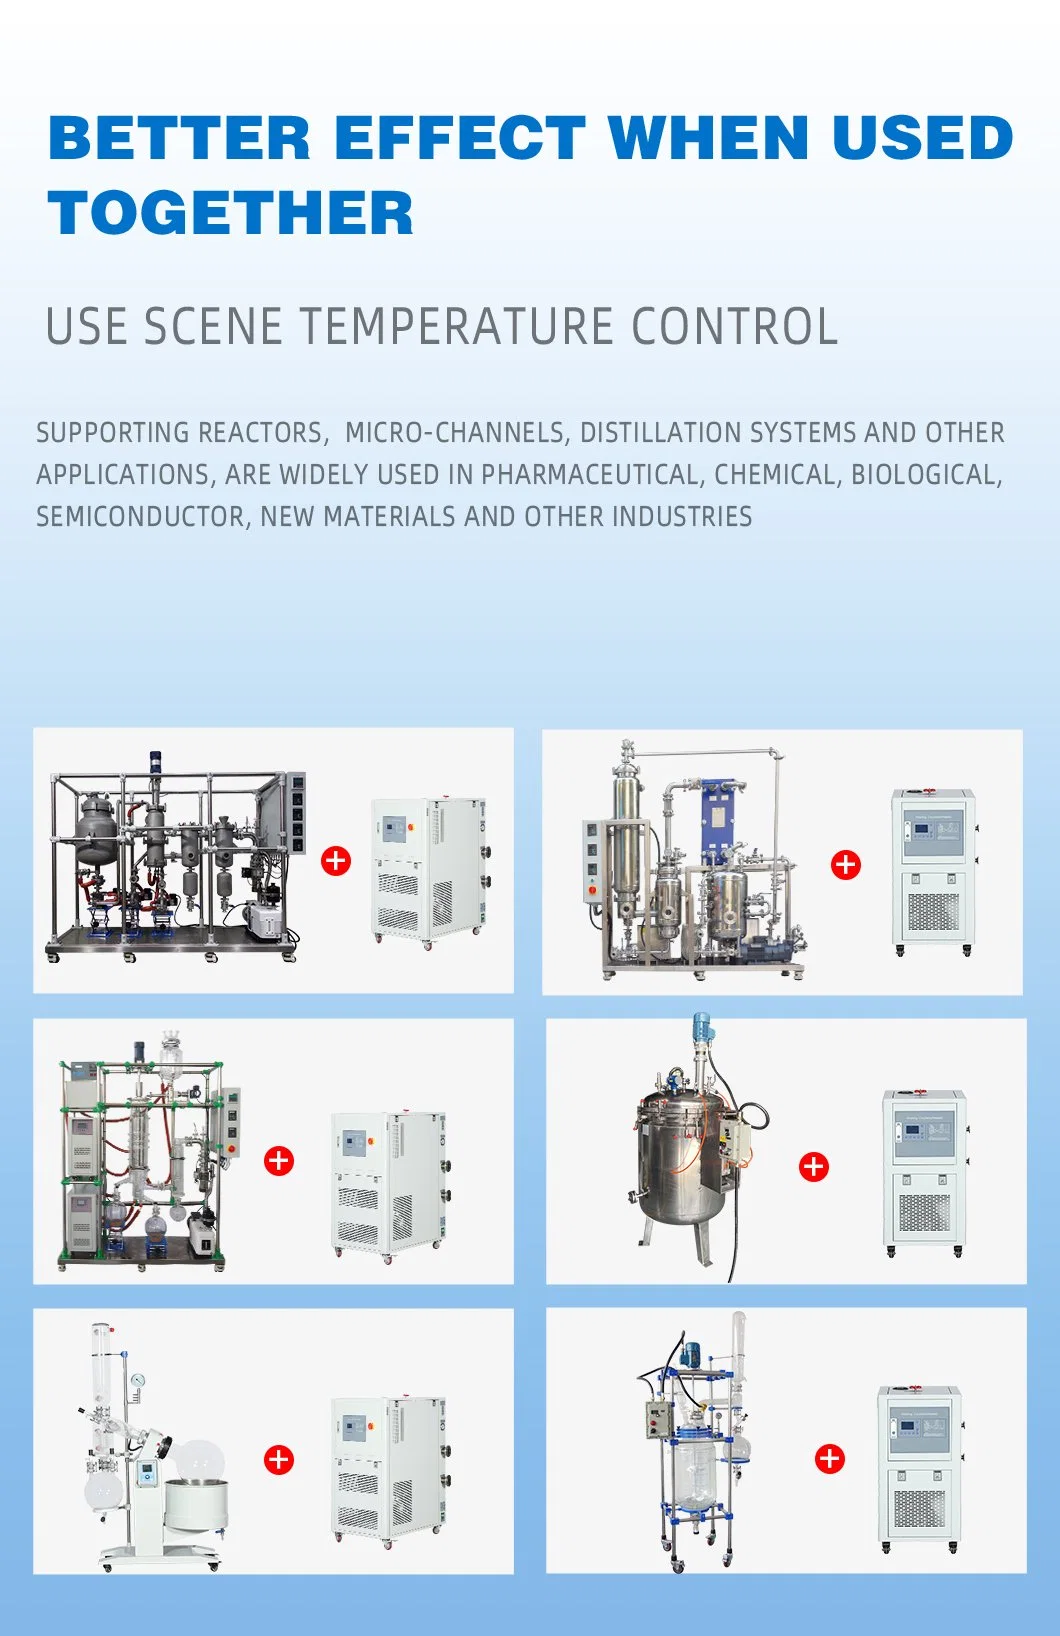 Air Cooled Water Chiller Machine Low Temperature Circulator